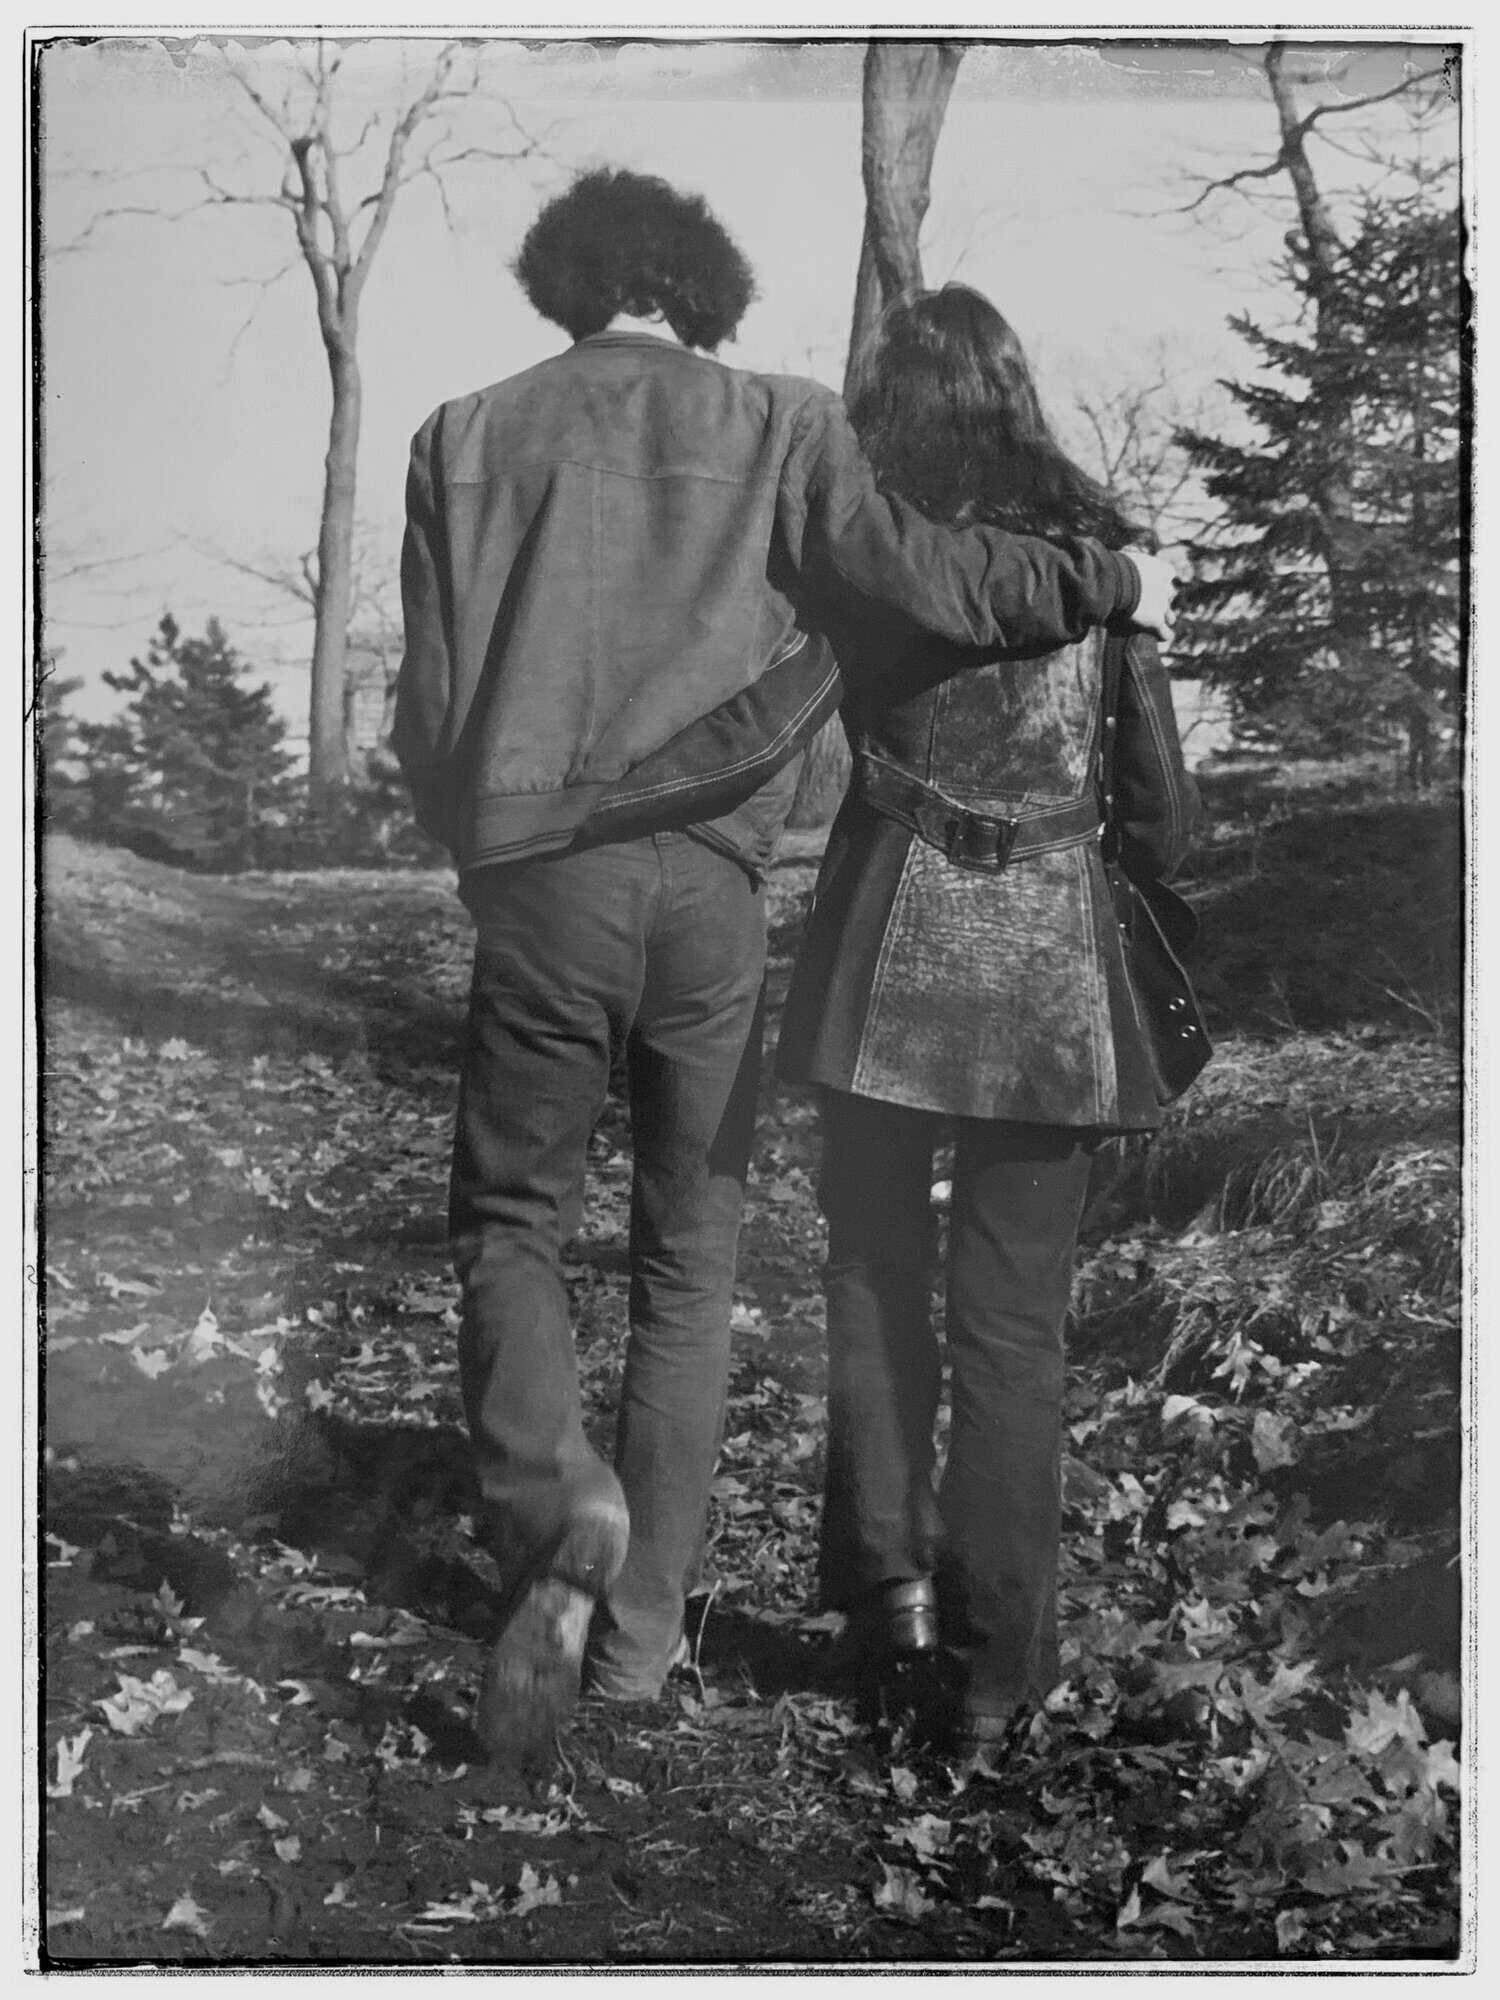 Couple, Montreal, 1973